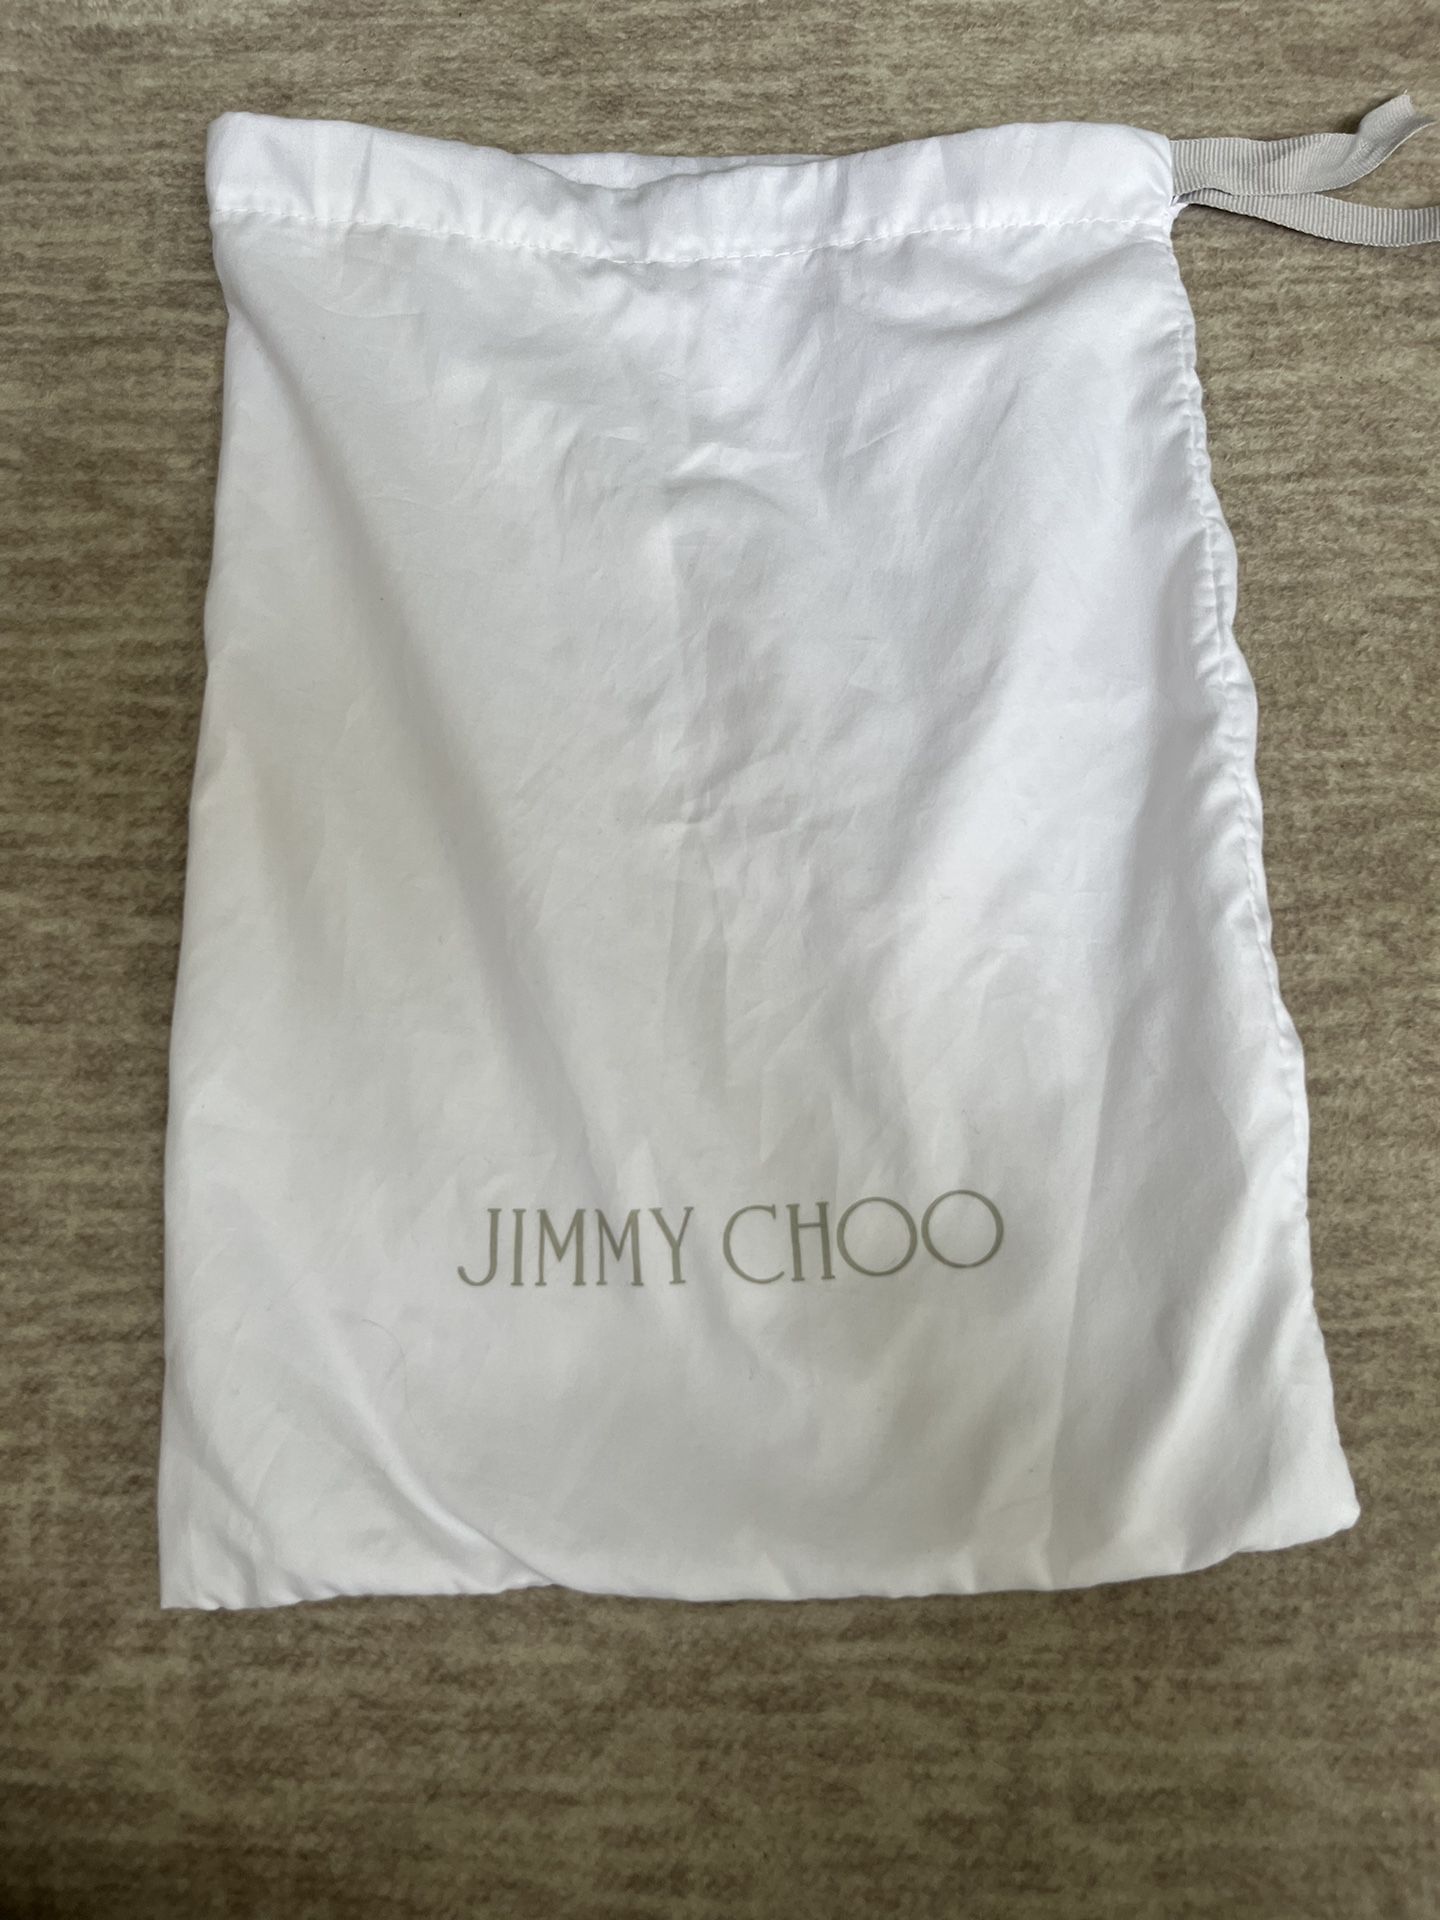 NEW Authentic Gucci White Silky Satin Purse Storage Drawstring Dust Bag 15x 13